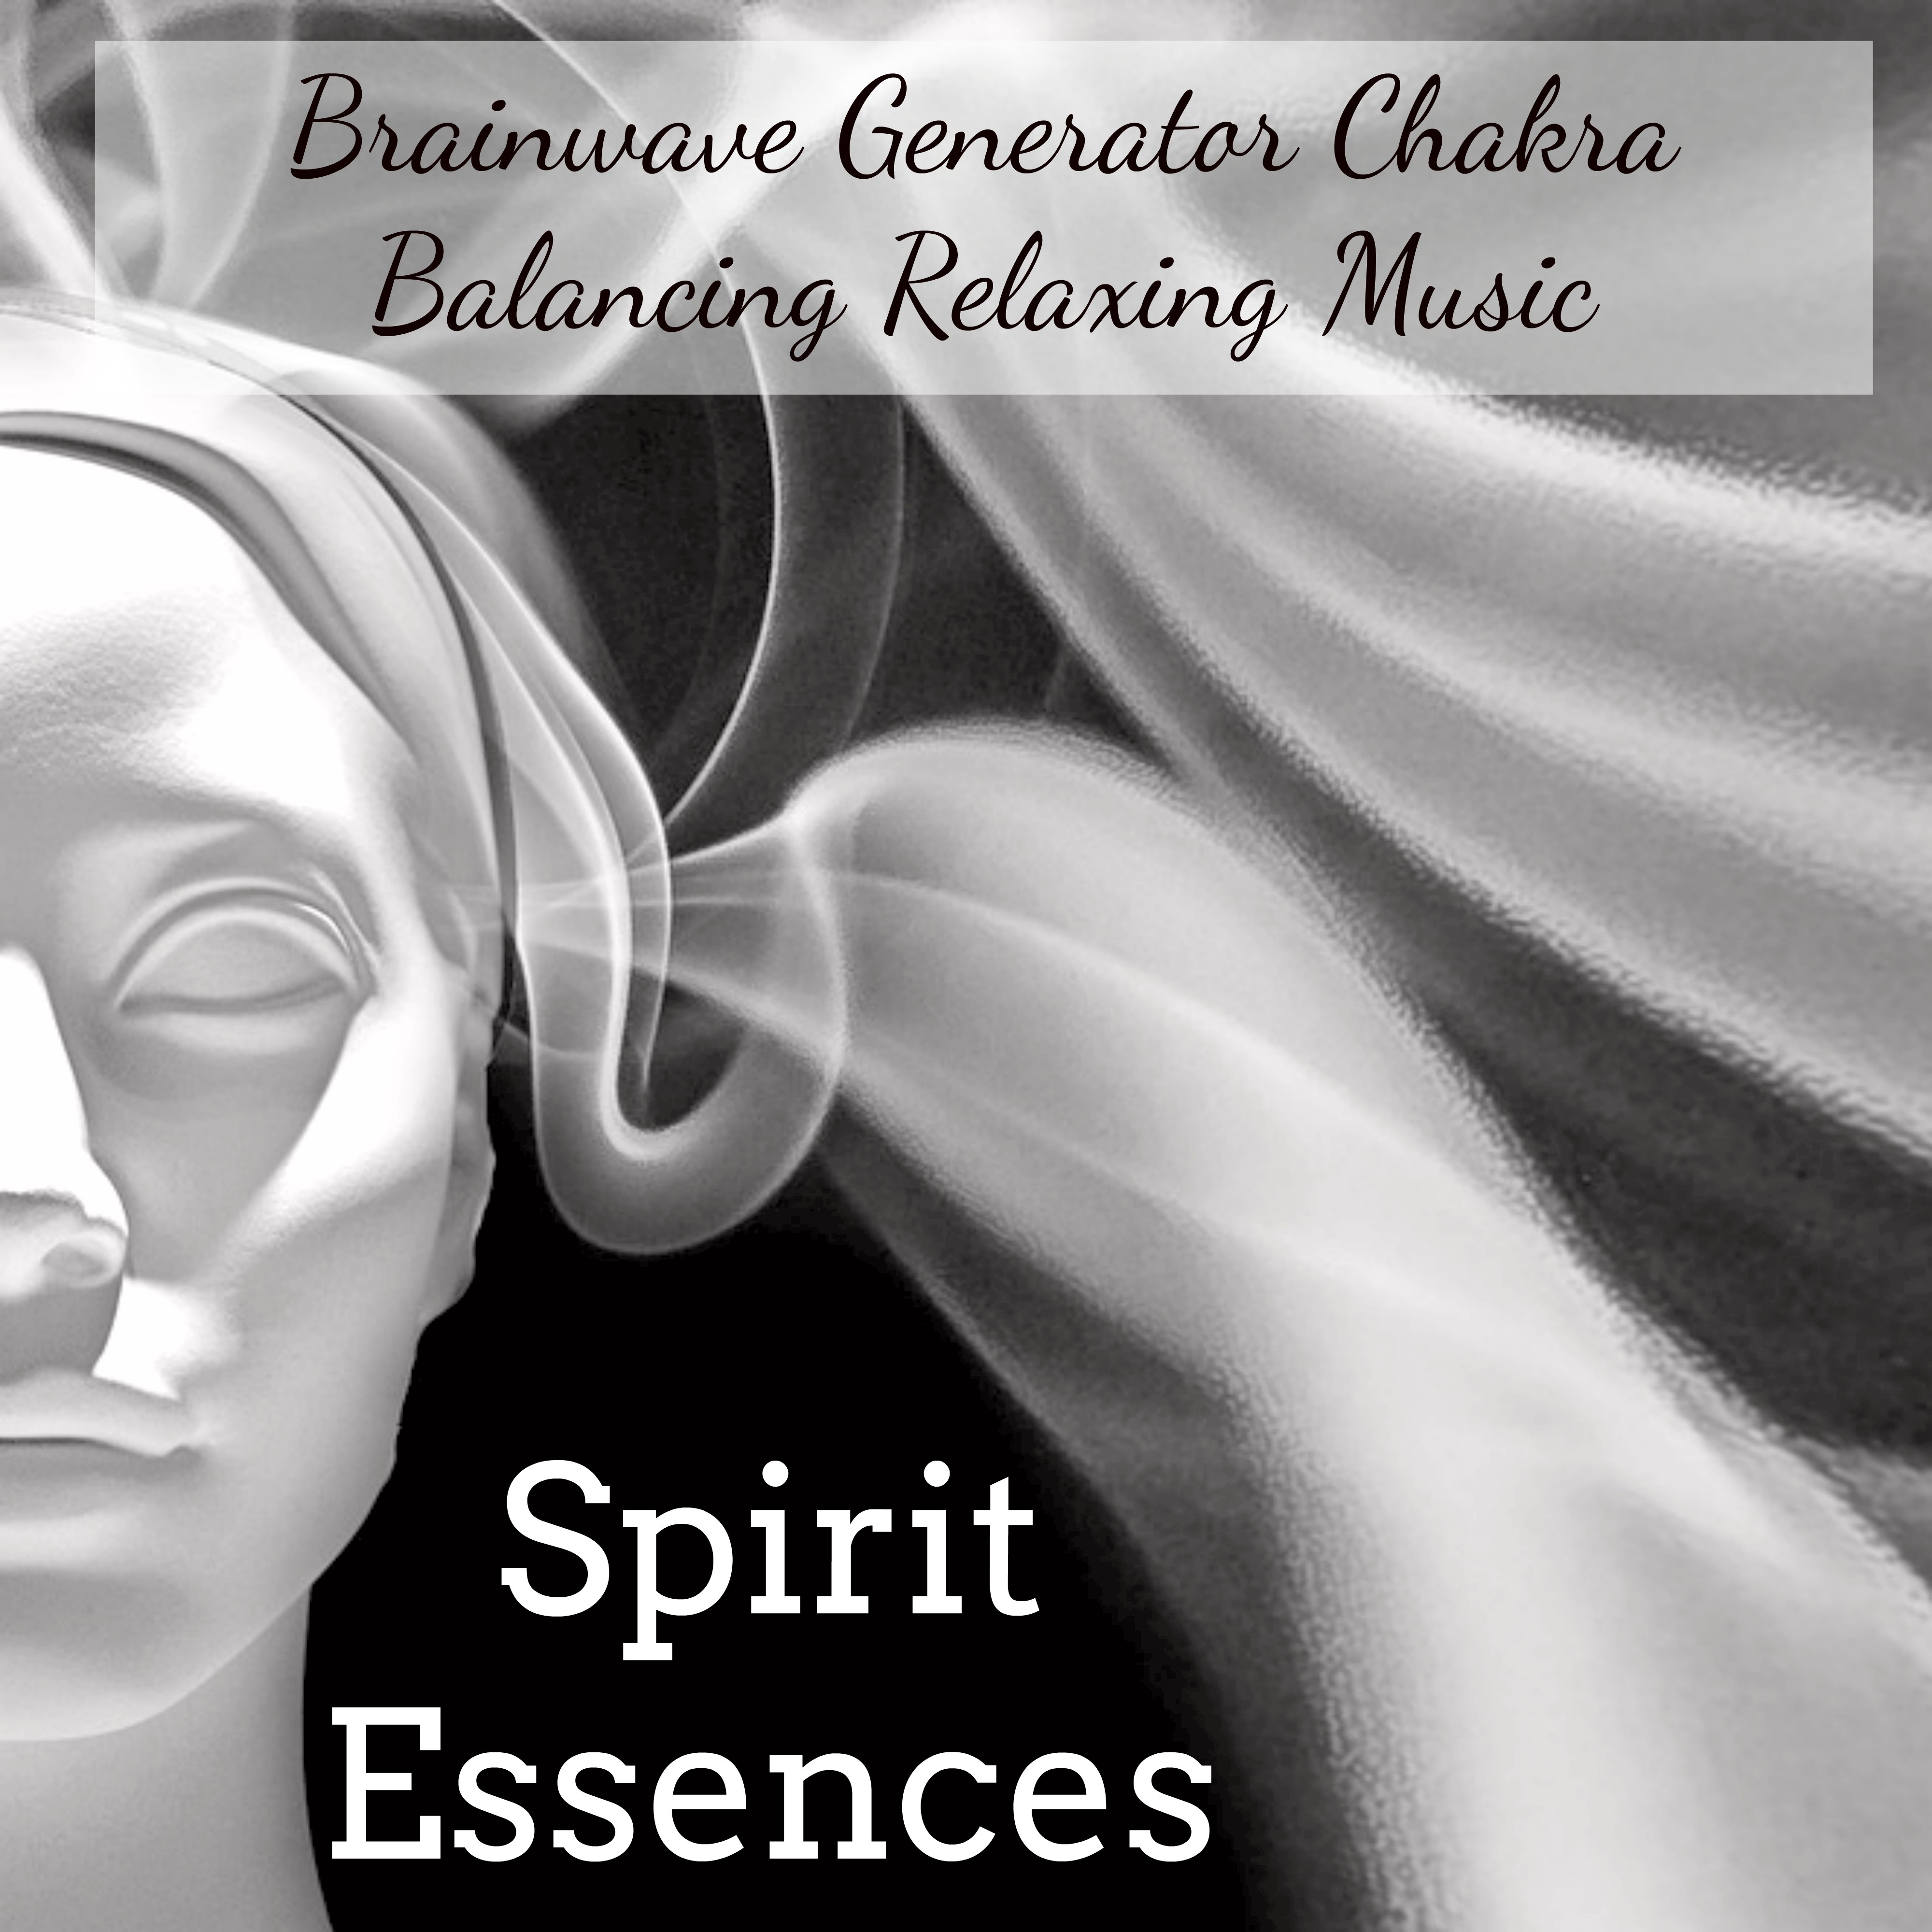 Spirit Essences - Brainwave Generator Chakra Balancing Relaxing Music with Nature Instrumental New Age Spiritual Healing Background